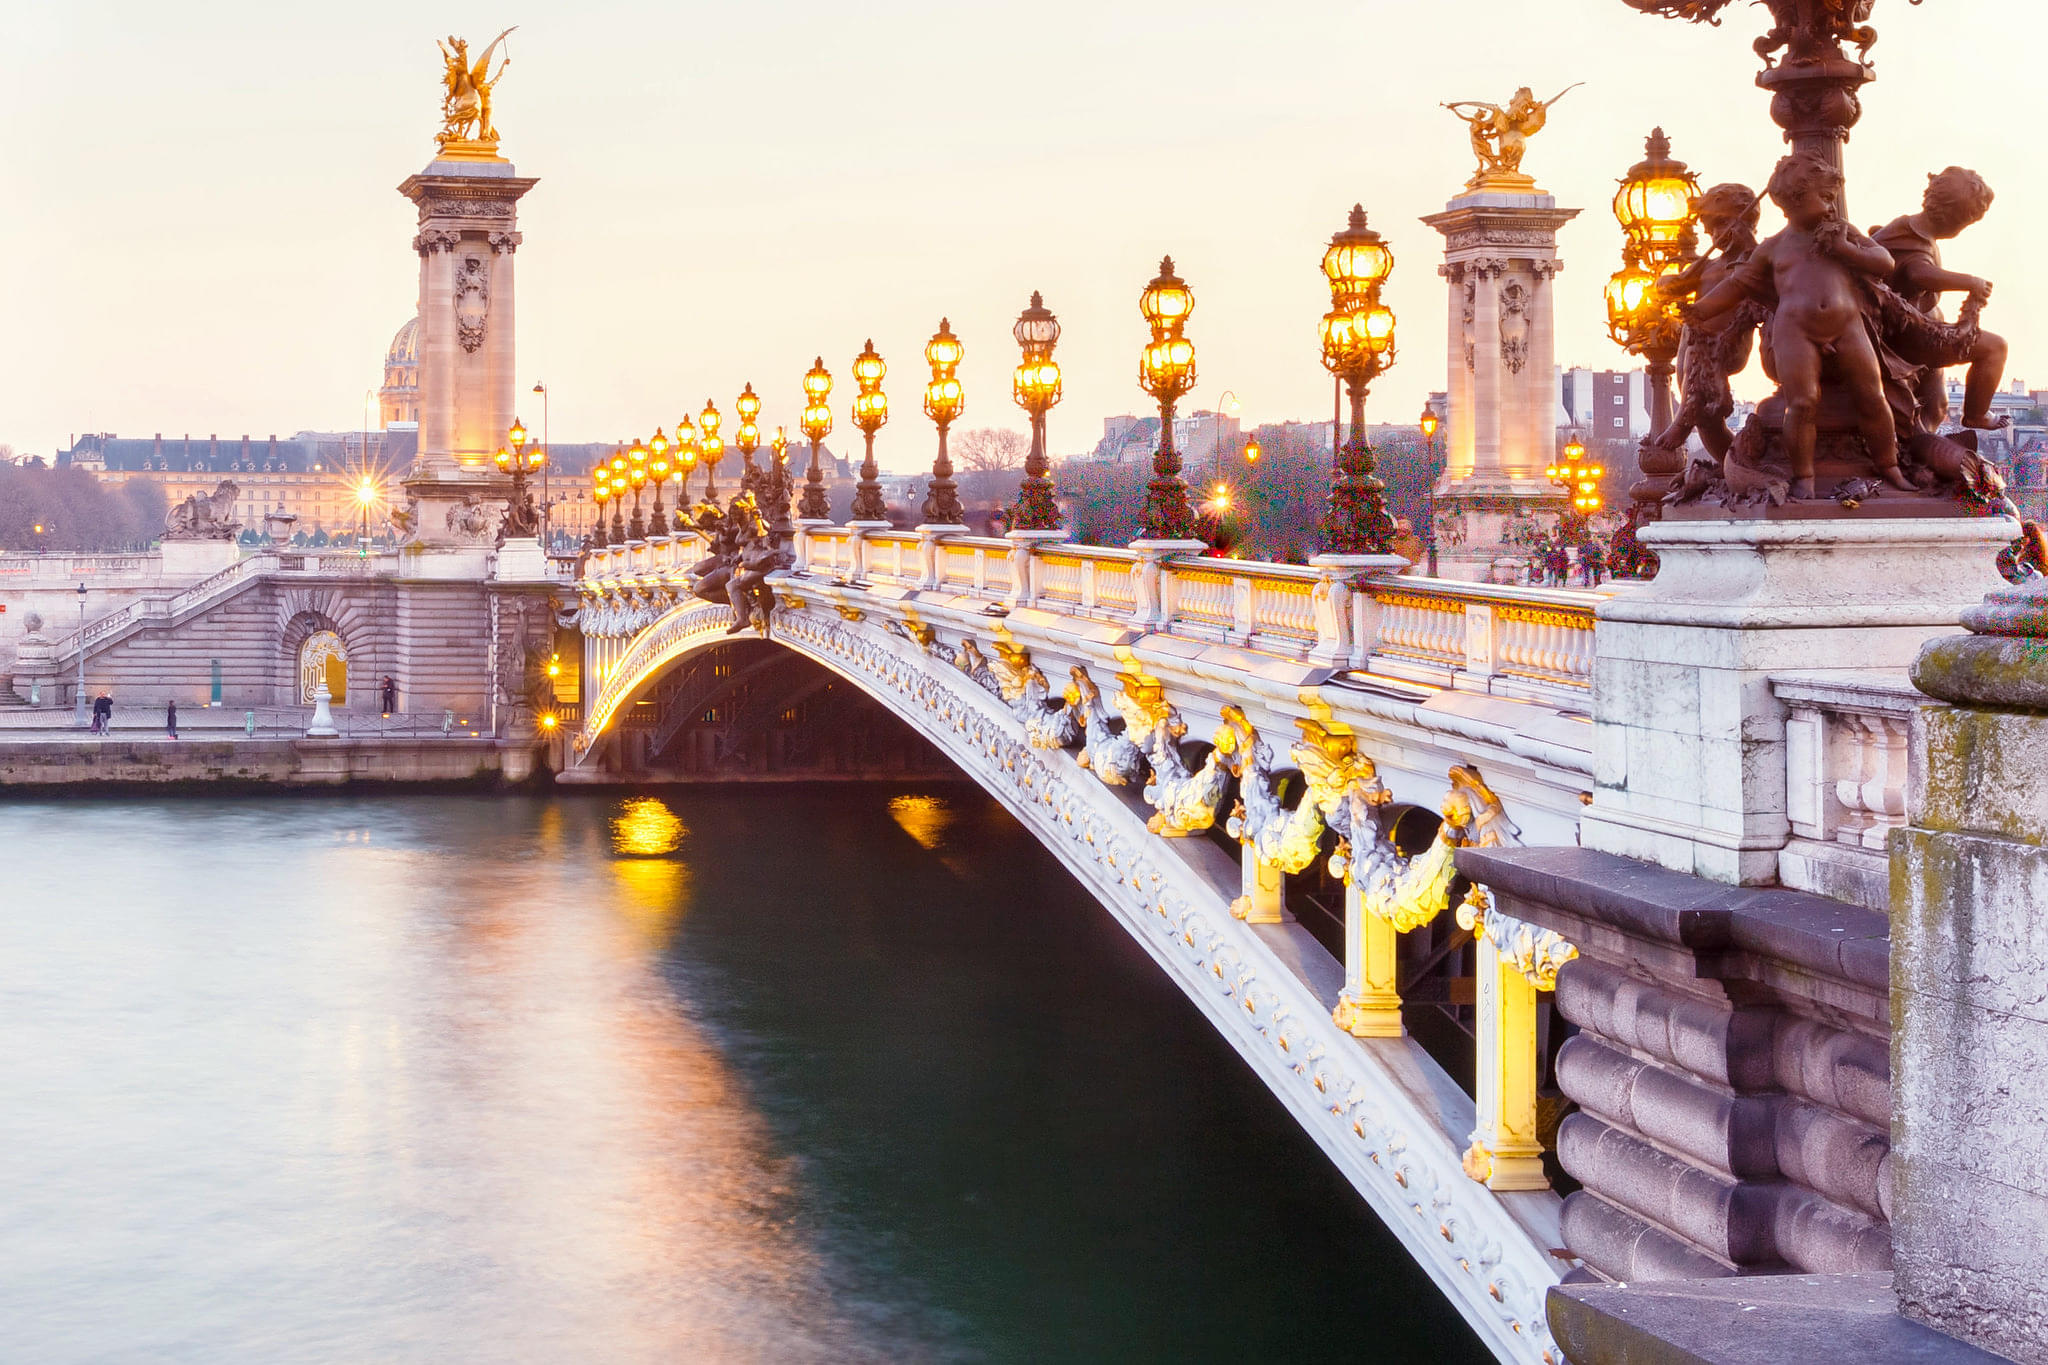 Bridges over the Seine River